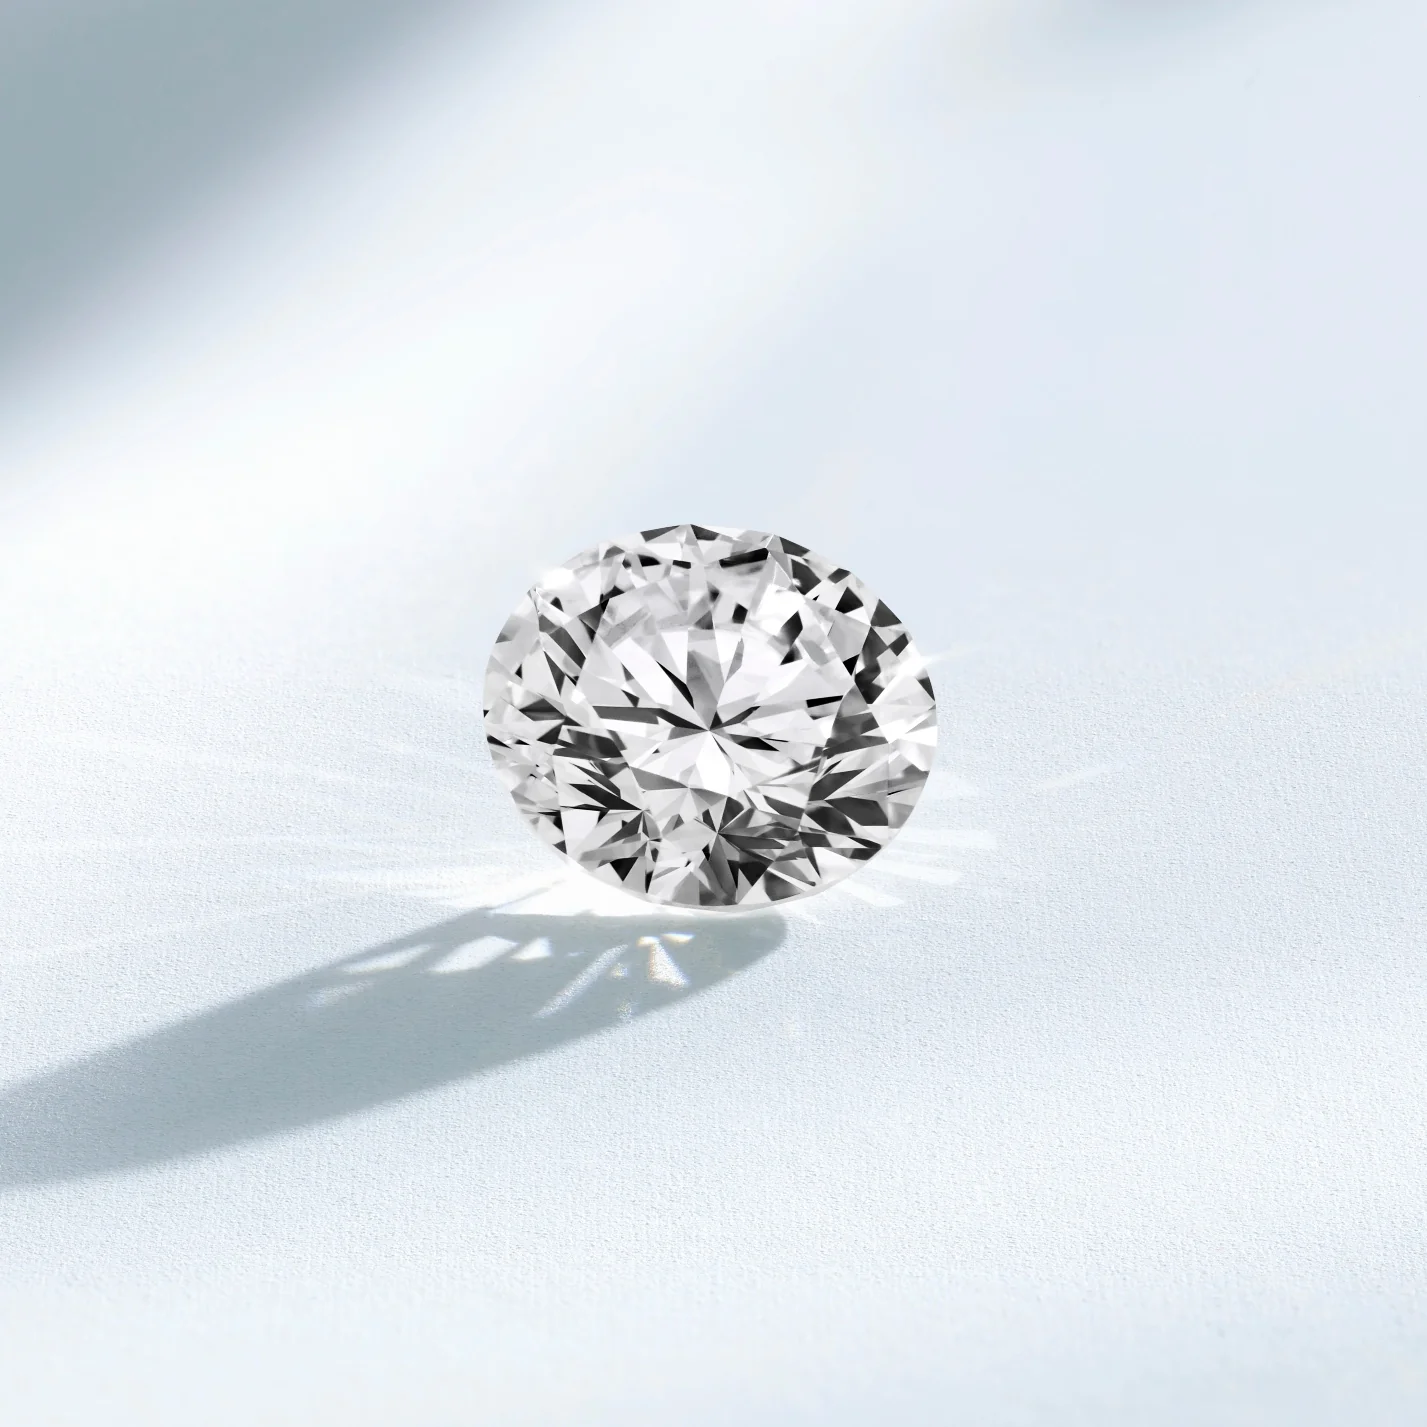 Explore Beautiful Lab-Grown Diamonds for Diamond Enthusiasts